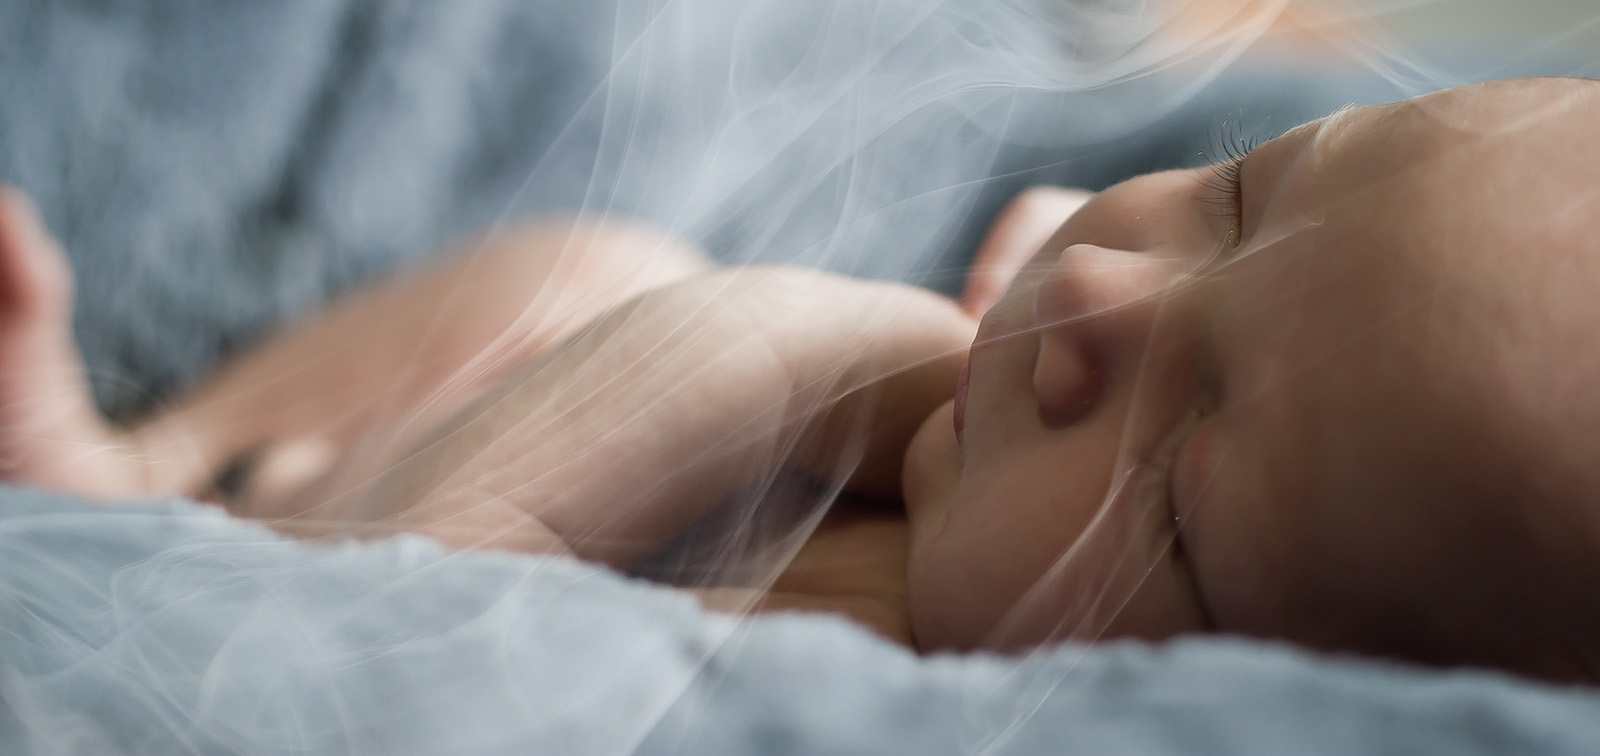 A newborn inhales tobacco smoke